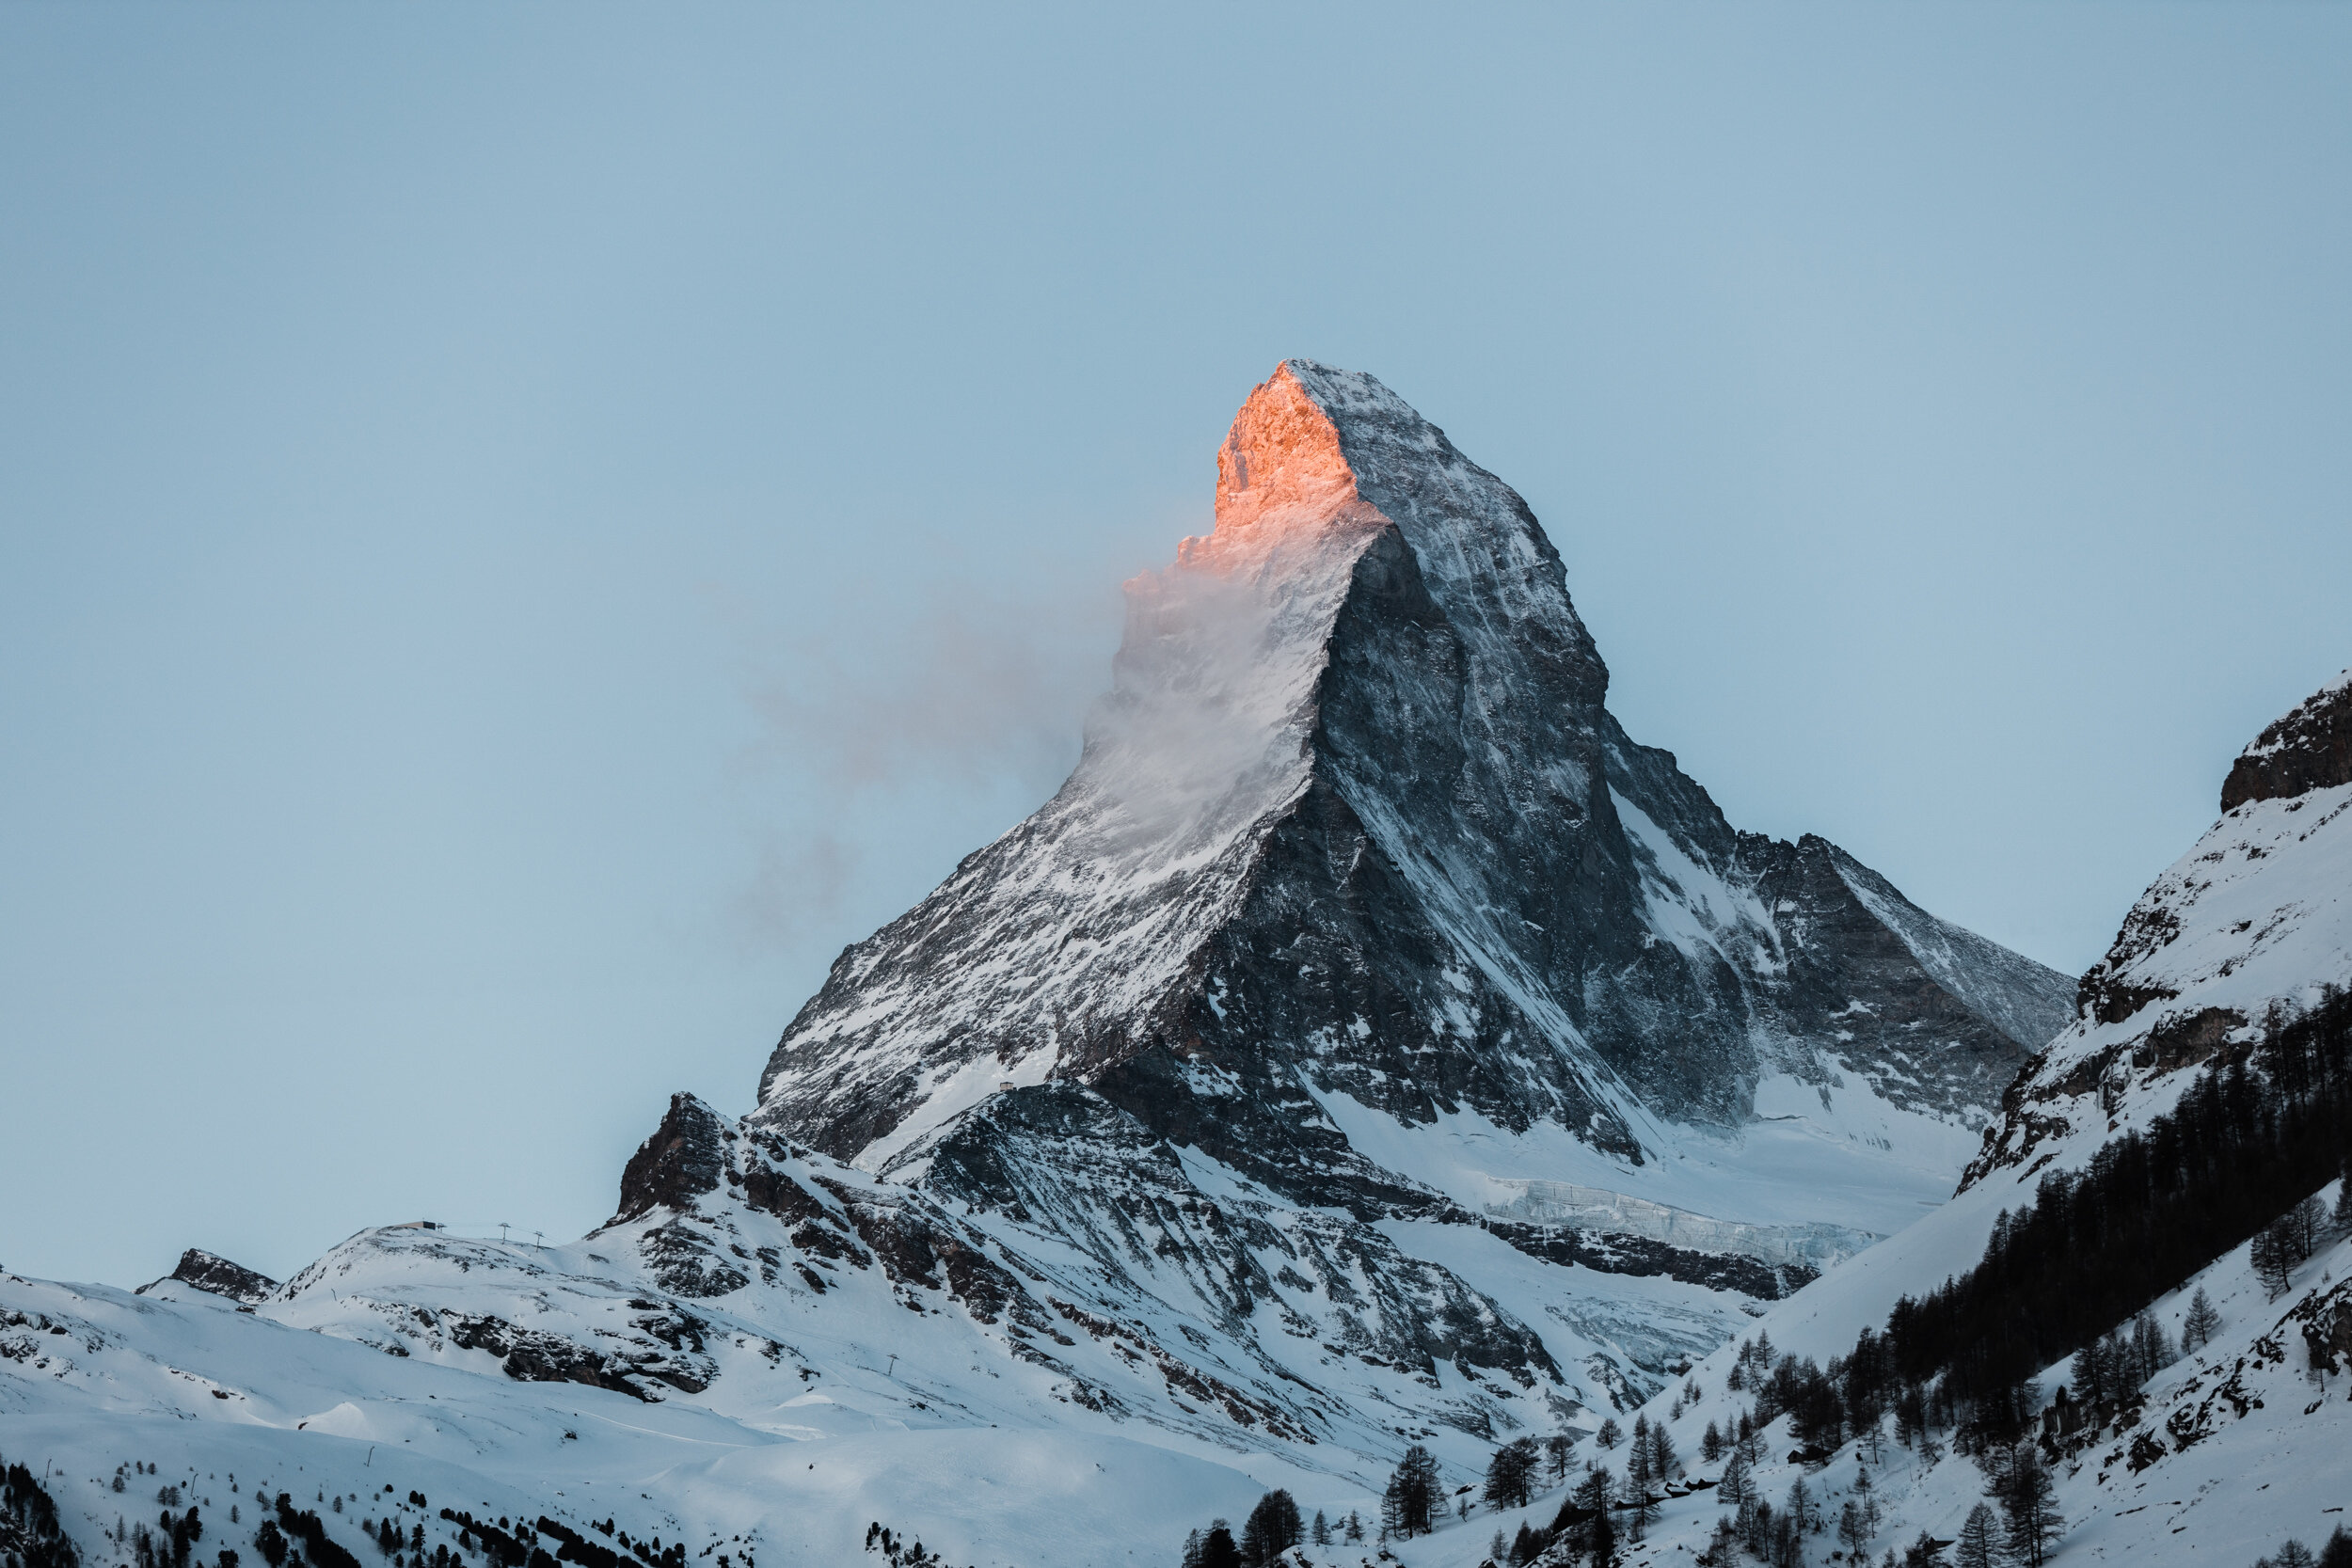 The Hearnes are Wedding Photographers in Zermatt, Switzerland | Matterhorn in the Winter